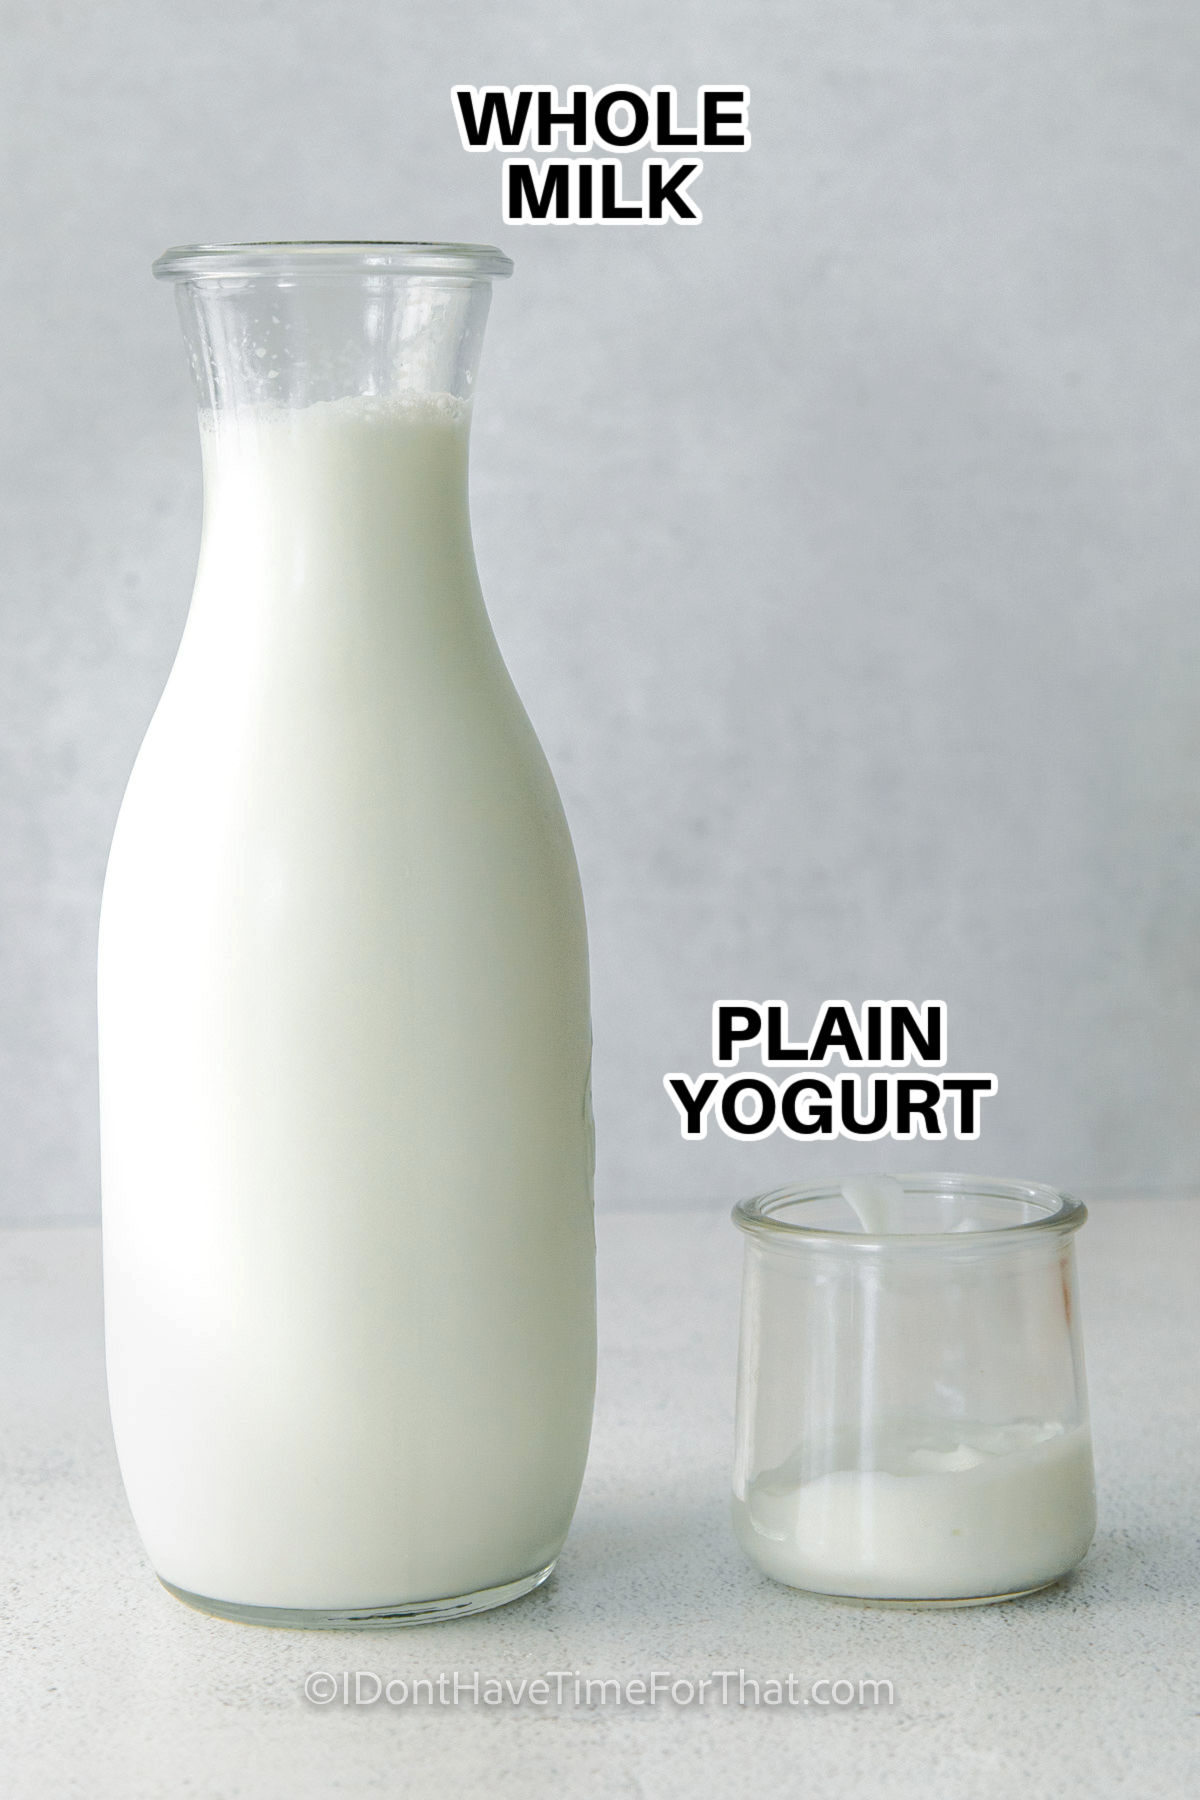 whole milk and plain yogurt with labels to make Instant Pot Yogurt